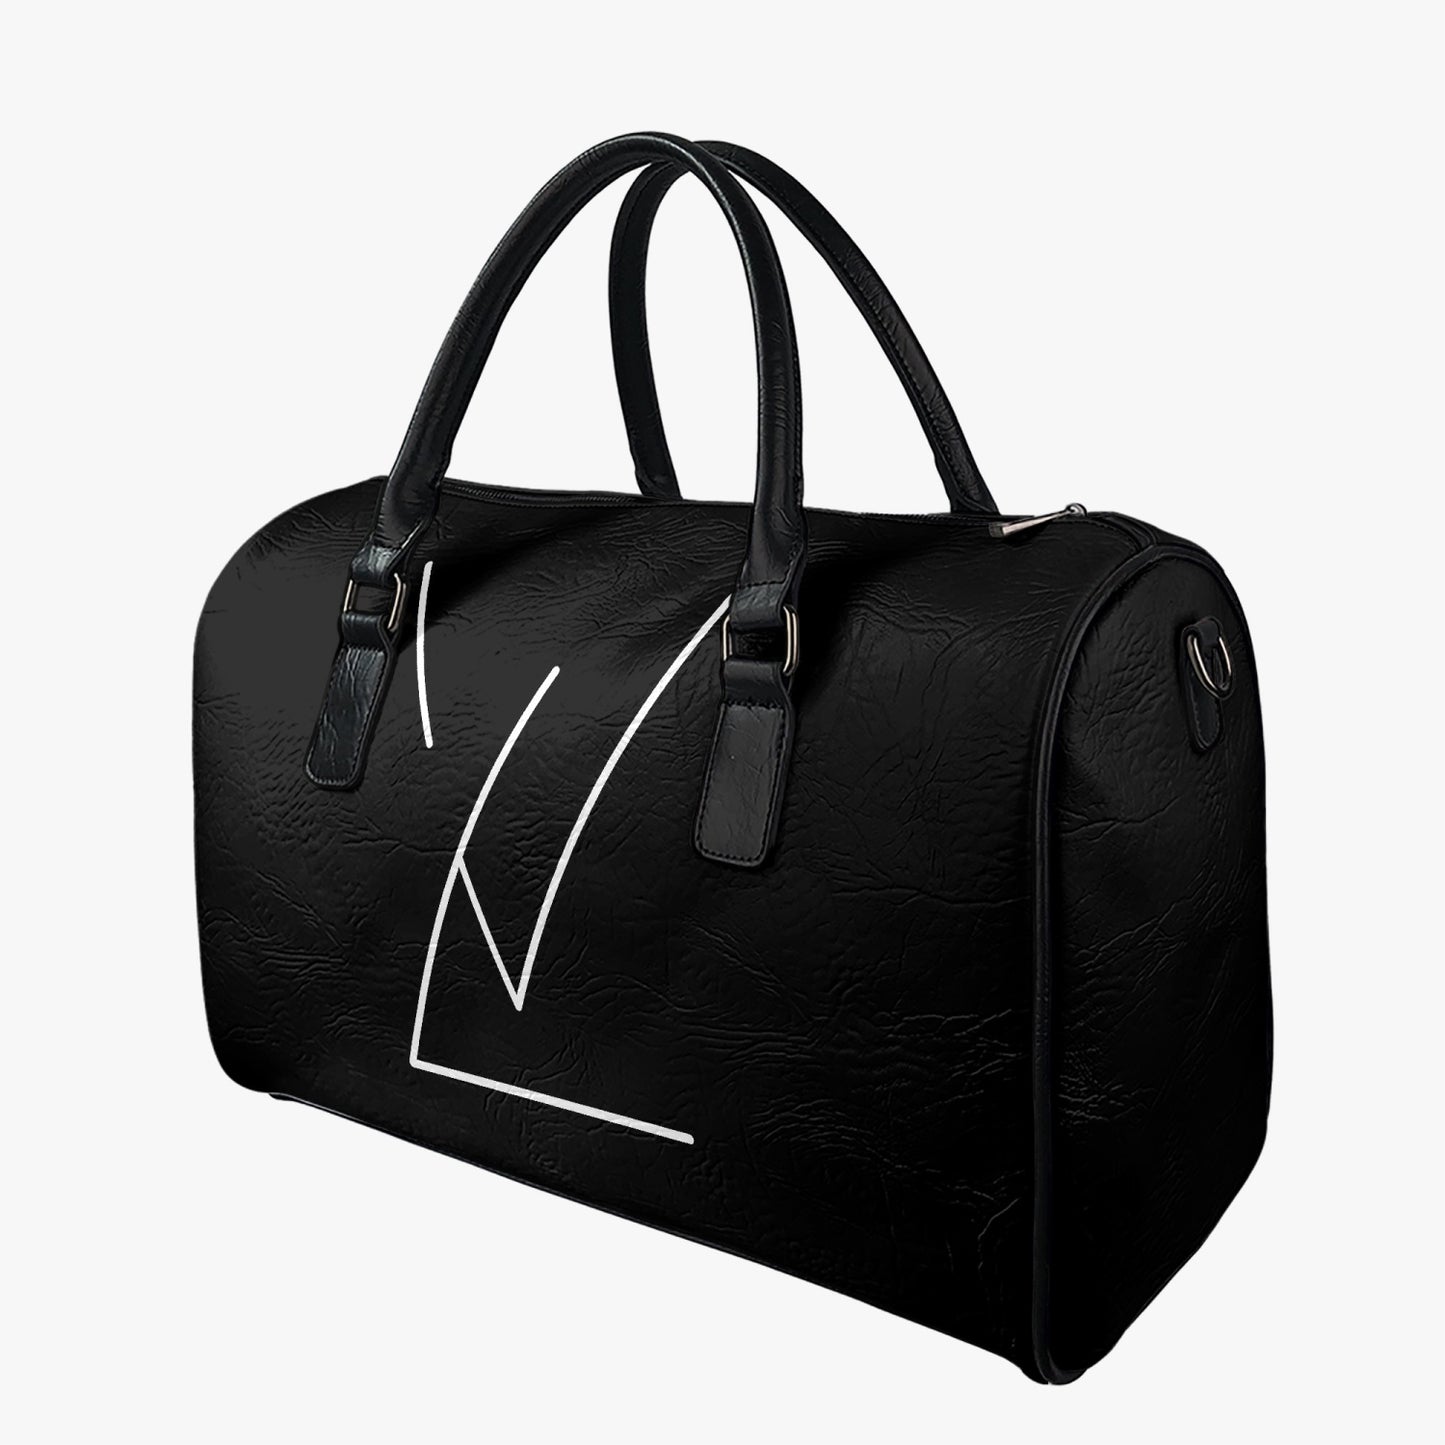 762. Portable Travel Bag